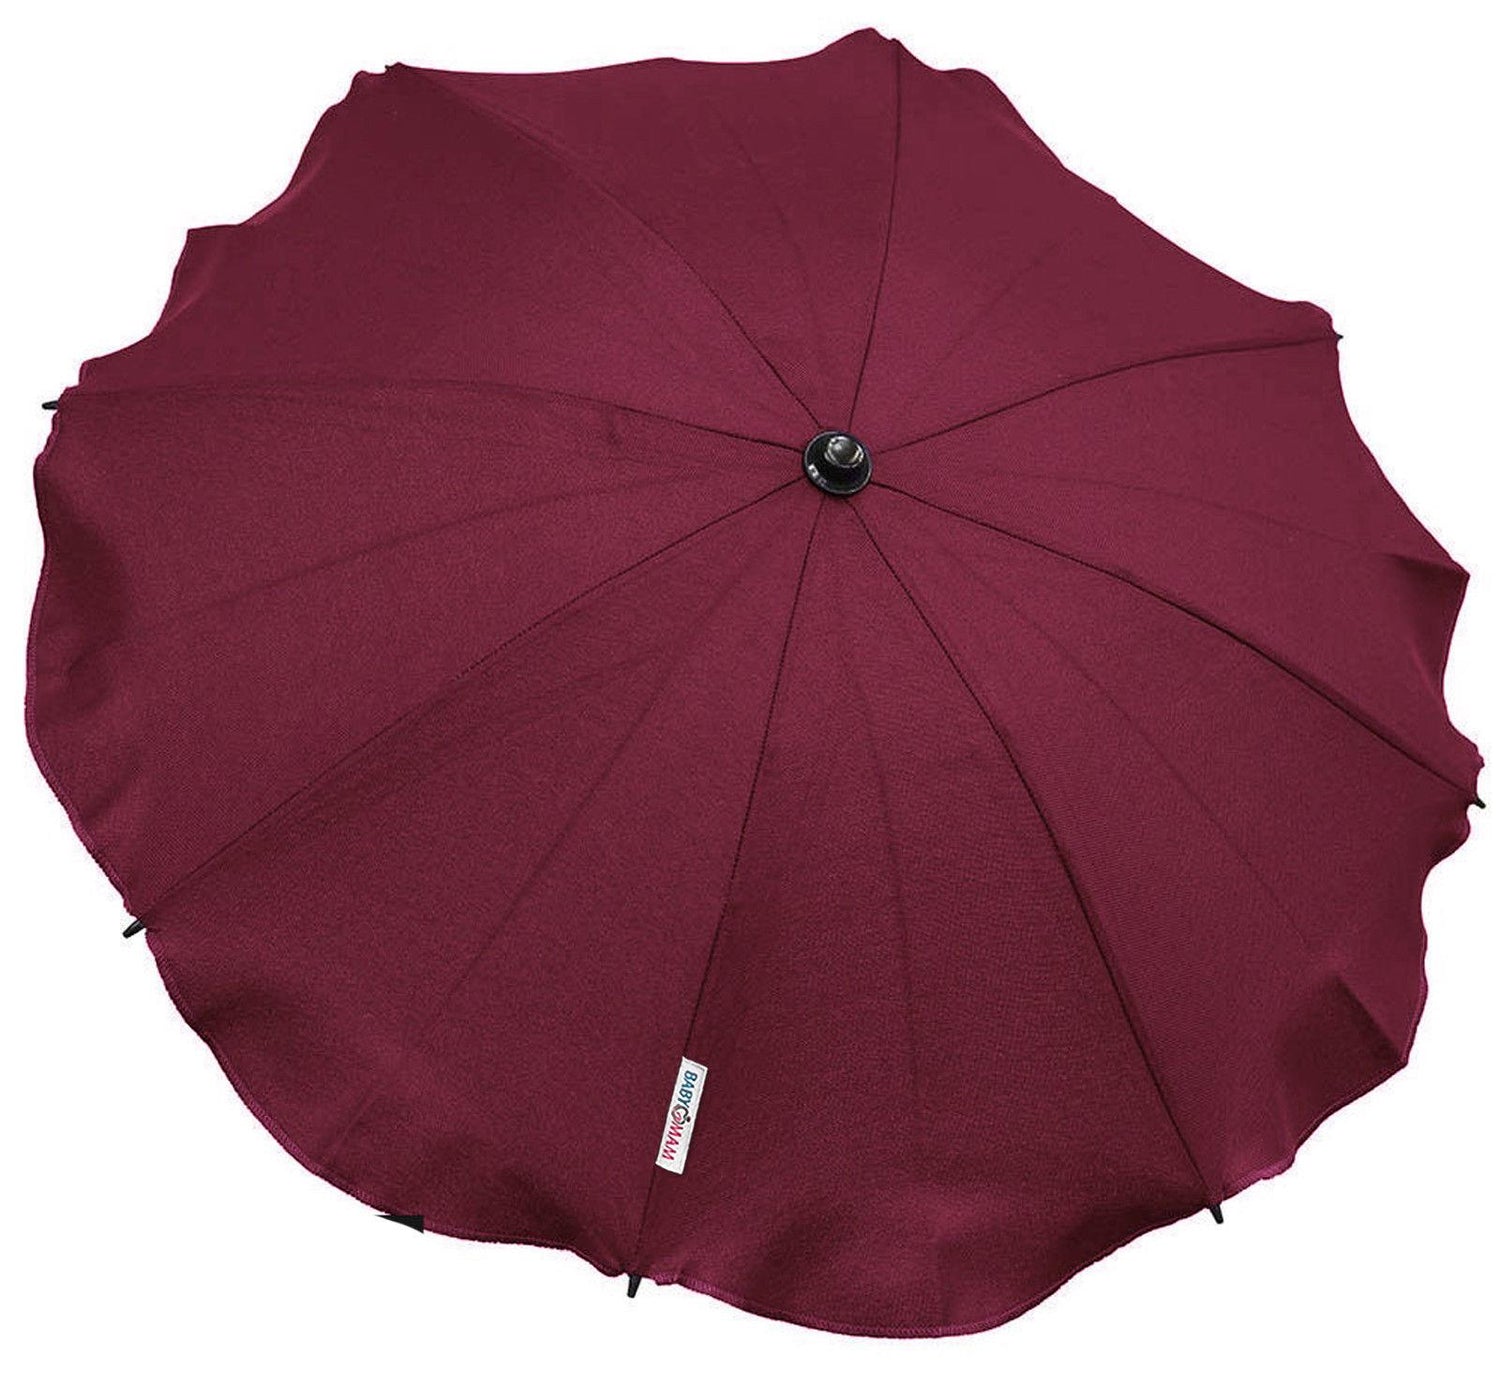 Baby Parasol Universal Sun Umbrella Pram Stroller Canopy Protect From Sun Rain Claret